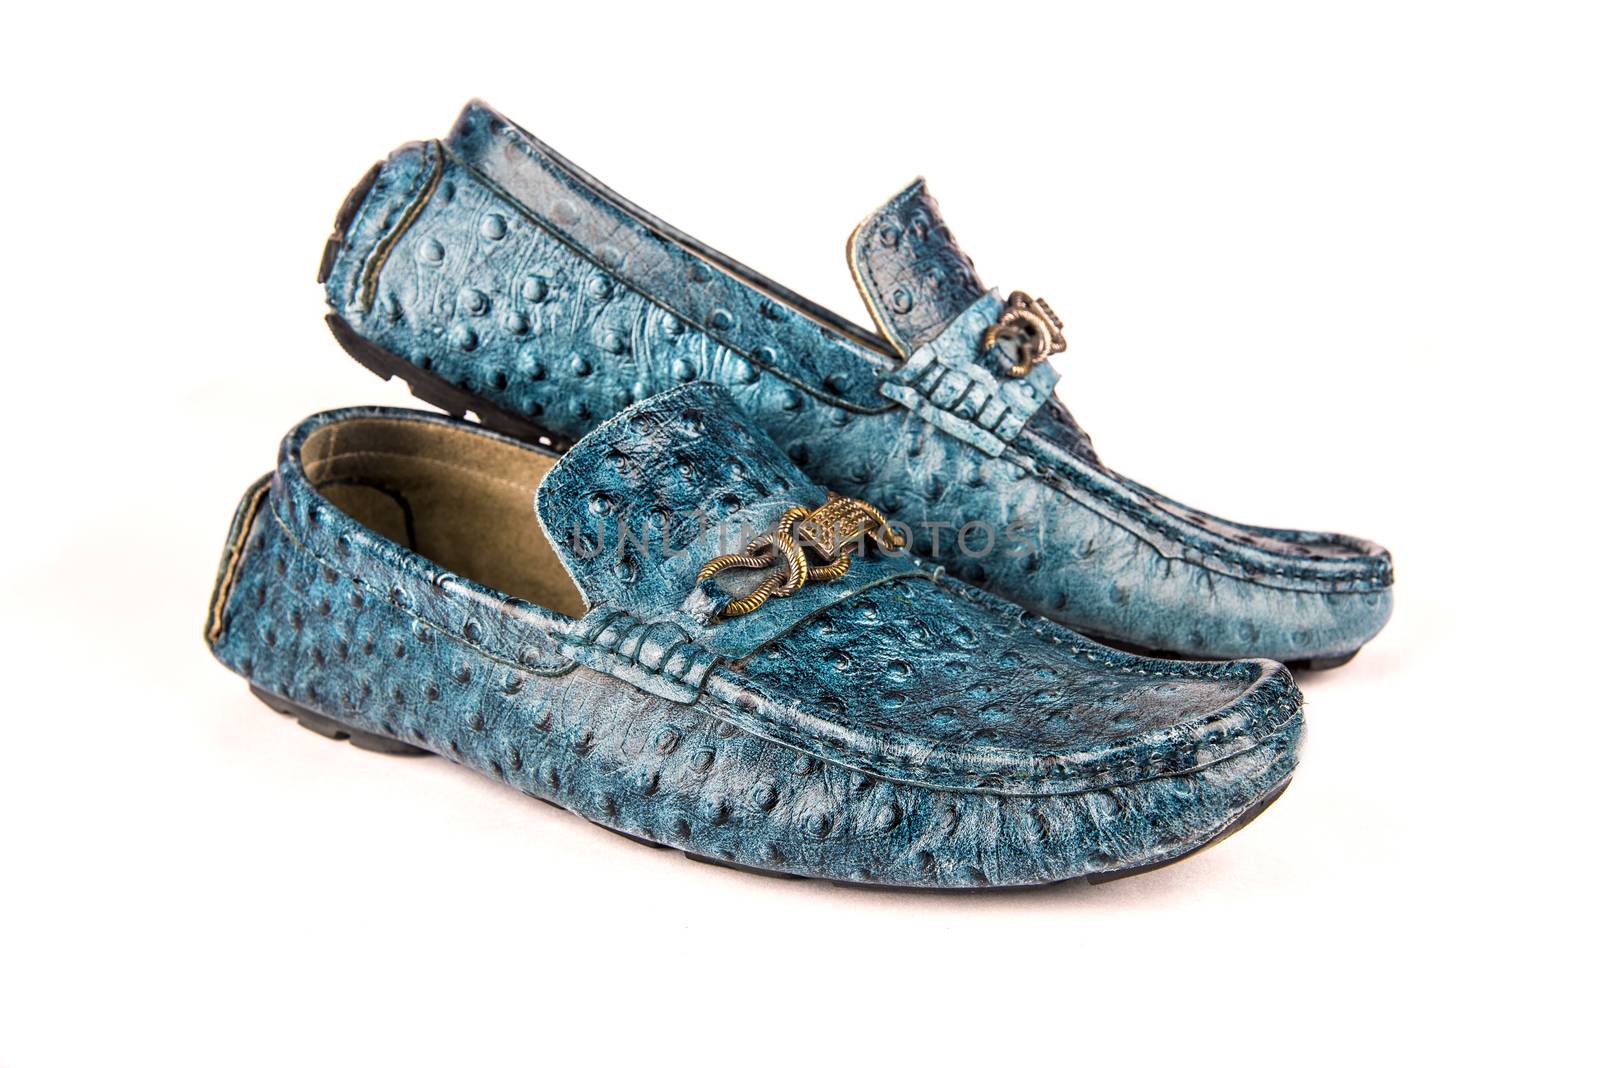 Stylish pair of alligator skin blue leather moccasins over white background